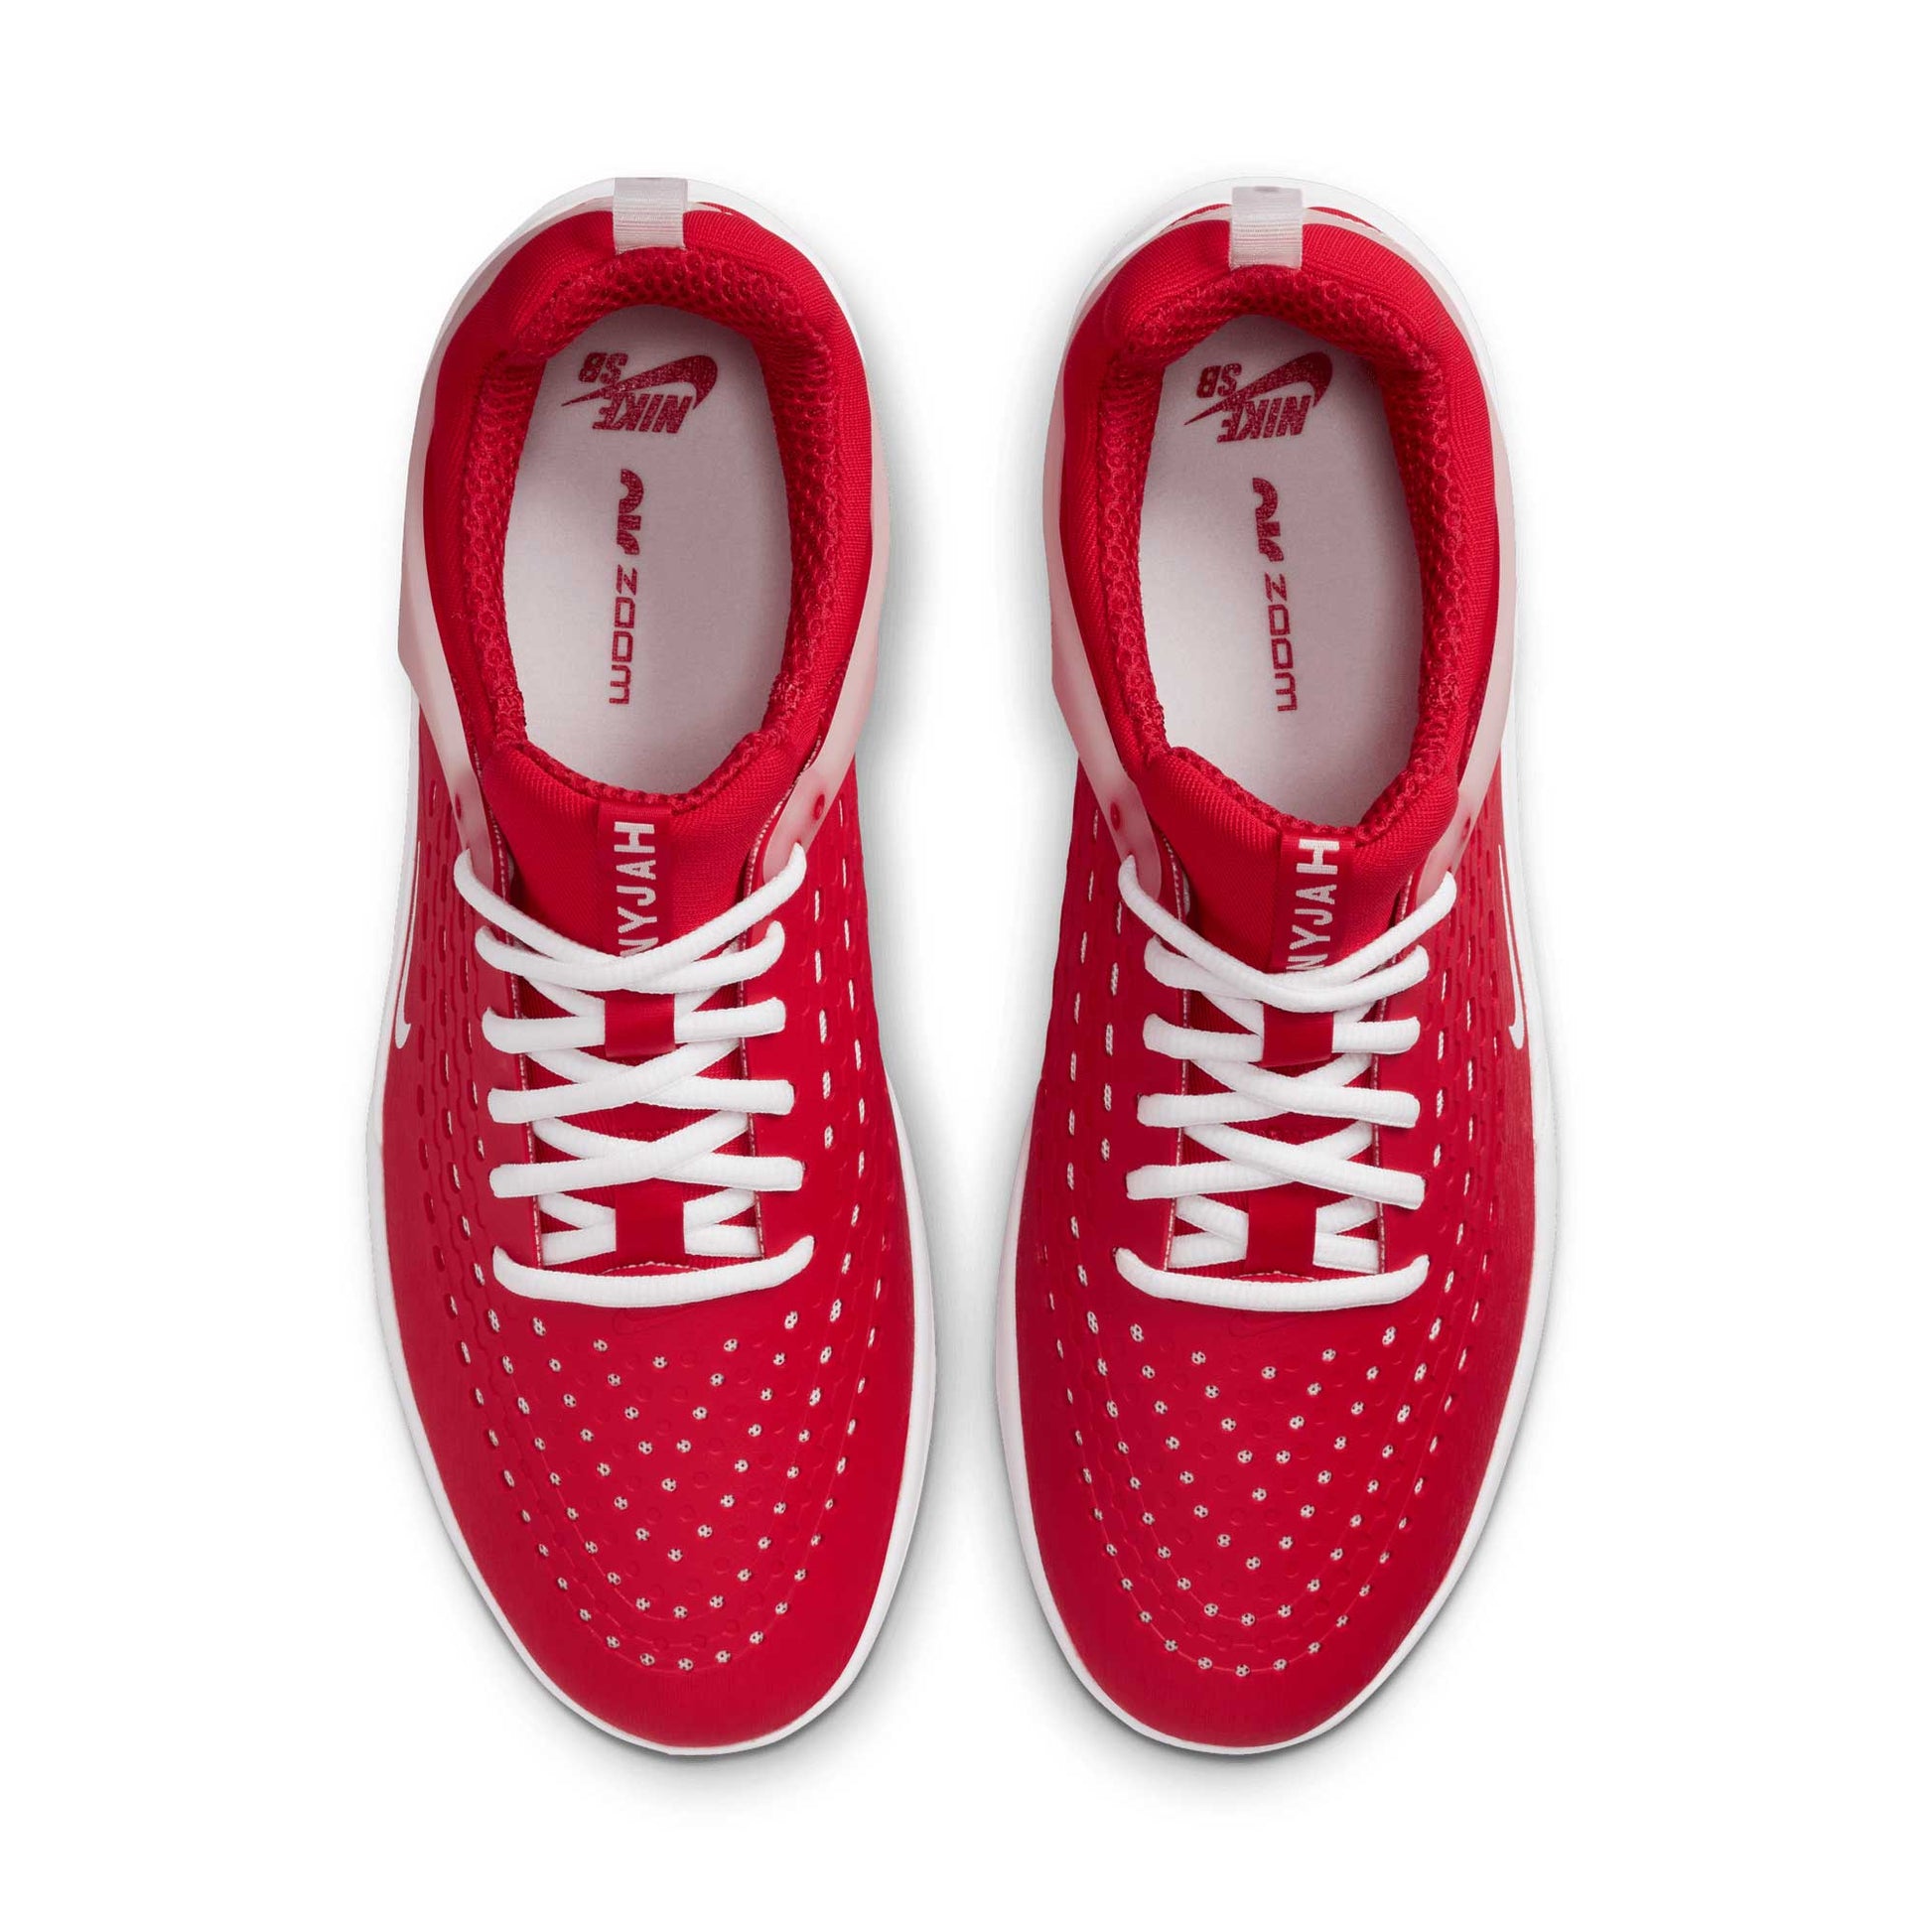 Nike SB Zoom Nyjah 3, university red/white-university red - Tiki Room Skateboards - 4